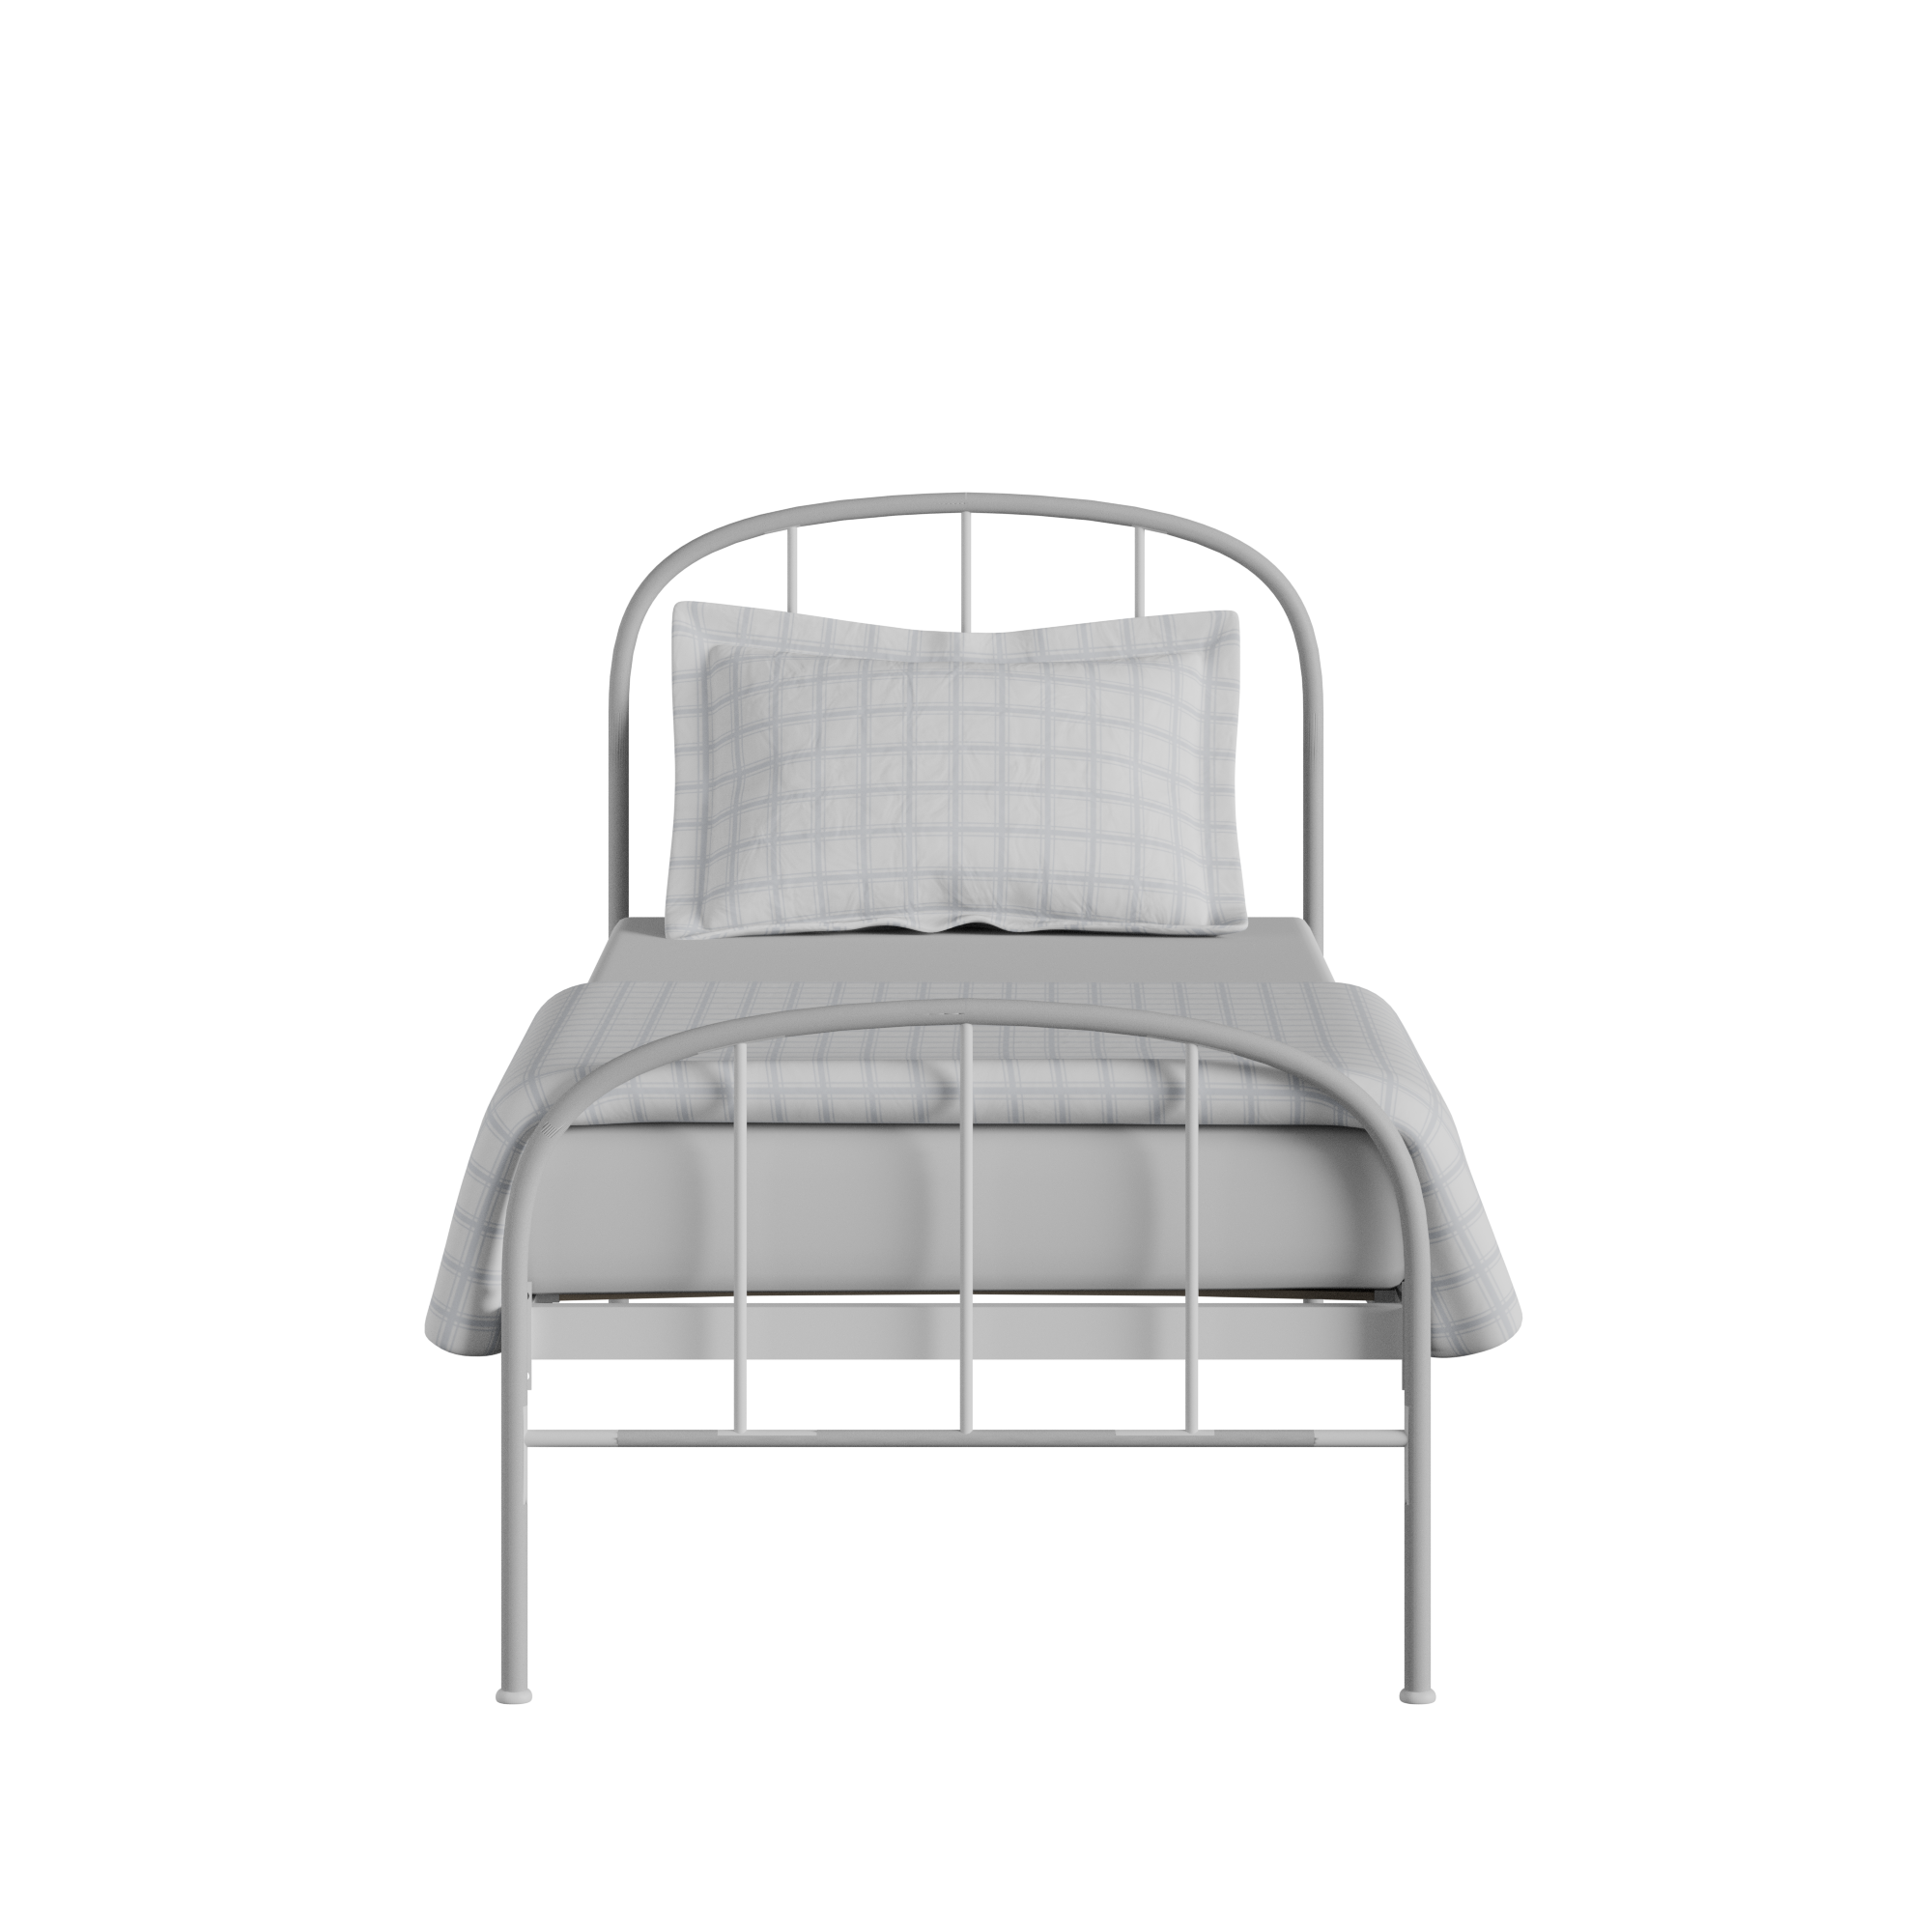 Waldo iron/metal single bed in white